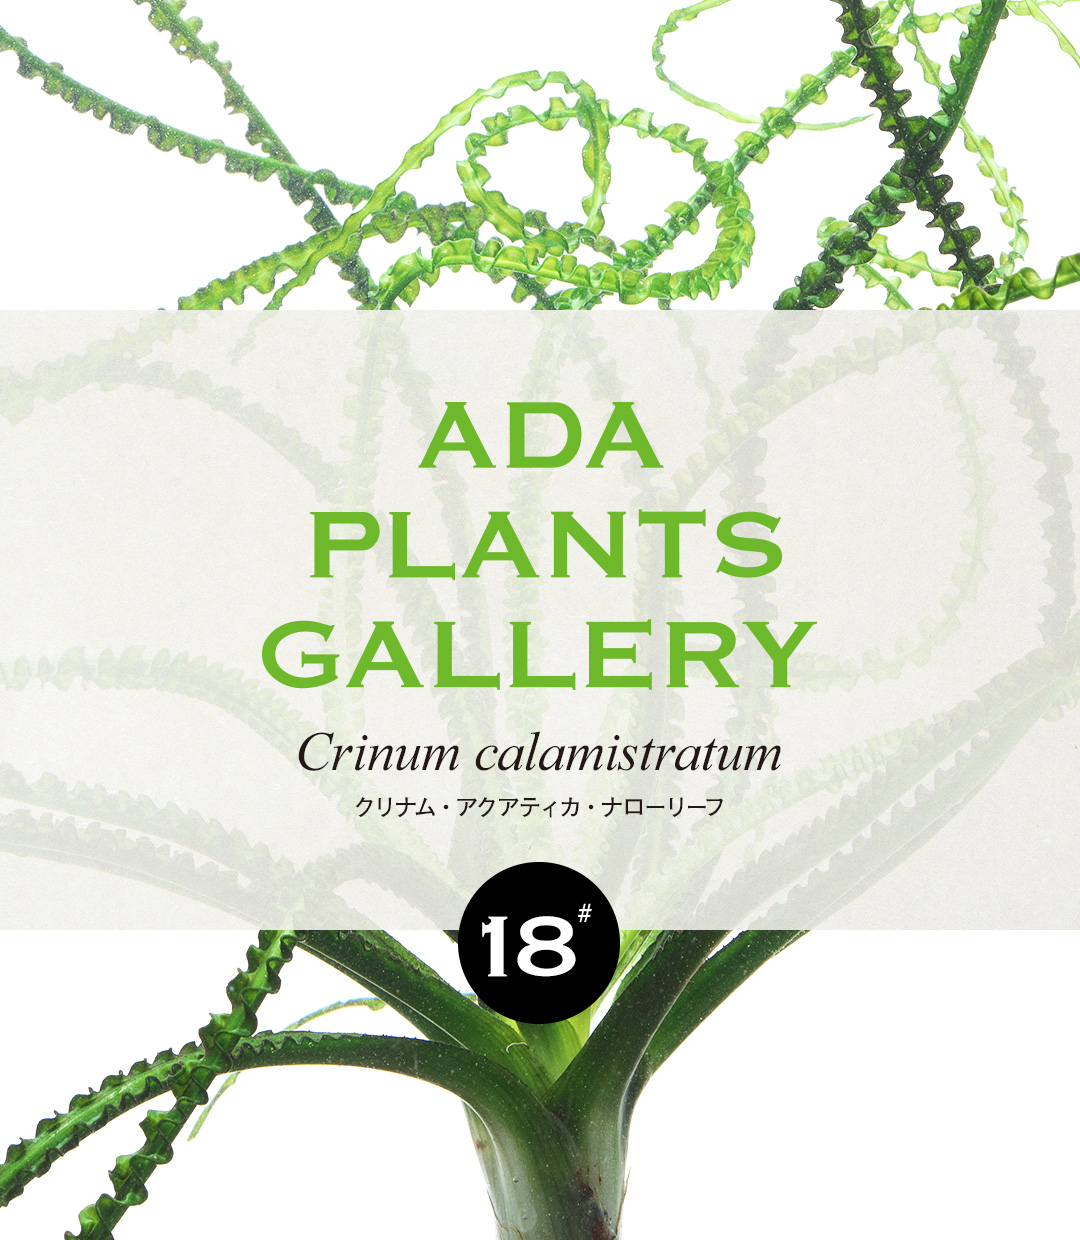 ADA PLANTS GALLERY #18「クリナム・アクアティカ・ナローリーフ」